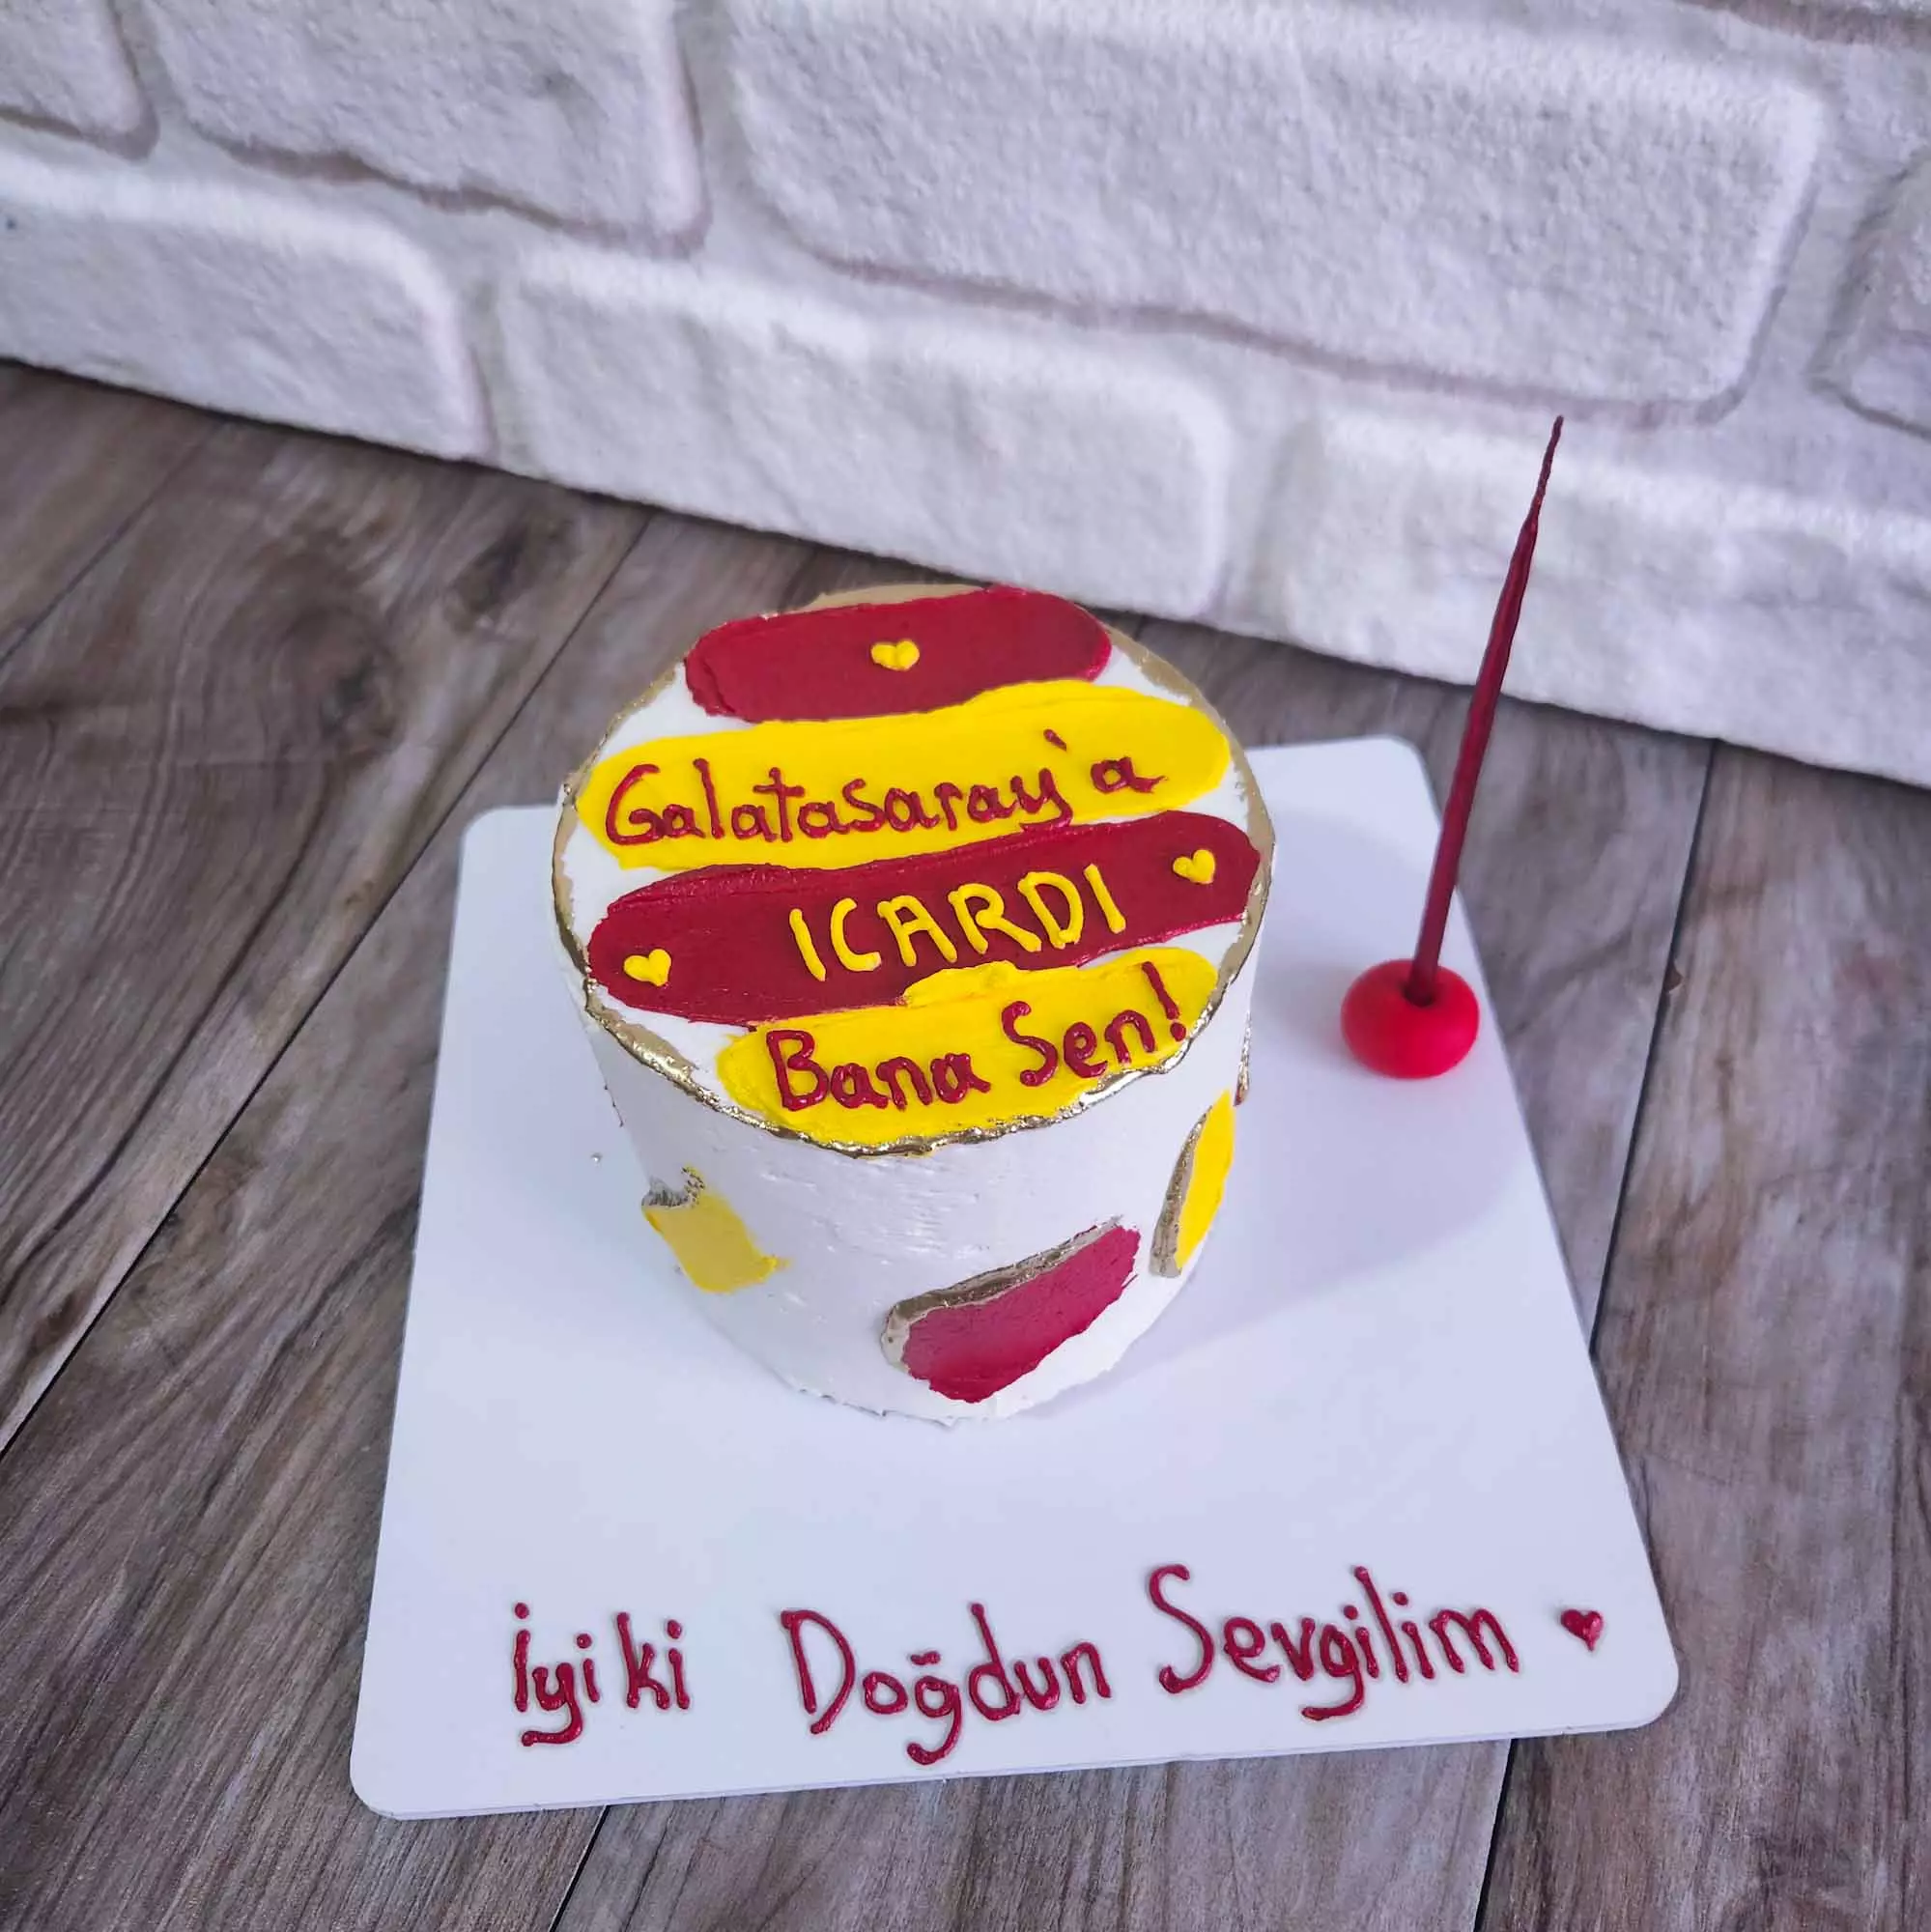 Galatasaray'a İcardi Yazılı Pasta